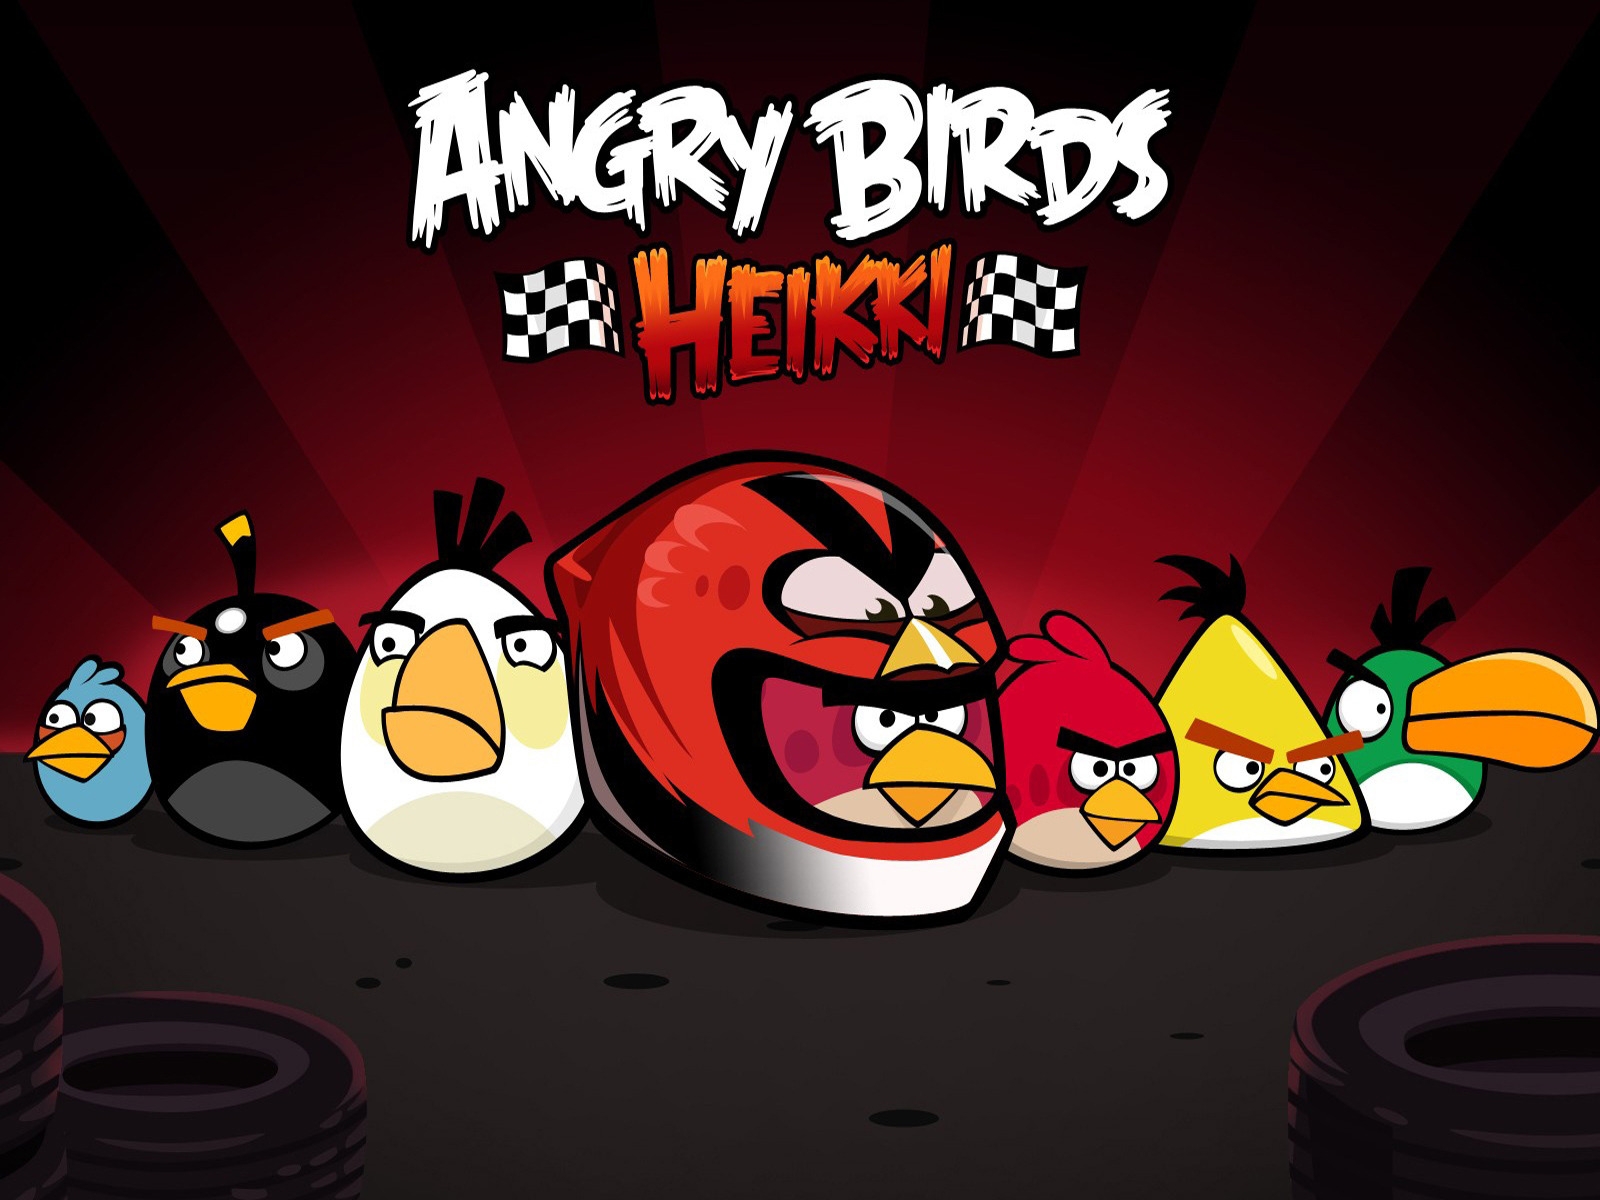 Angry Birds Heikki for 1600 x 1200 resolution